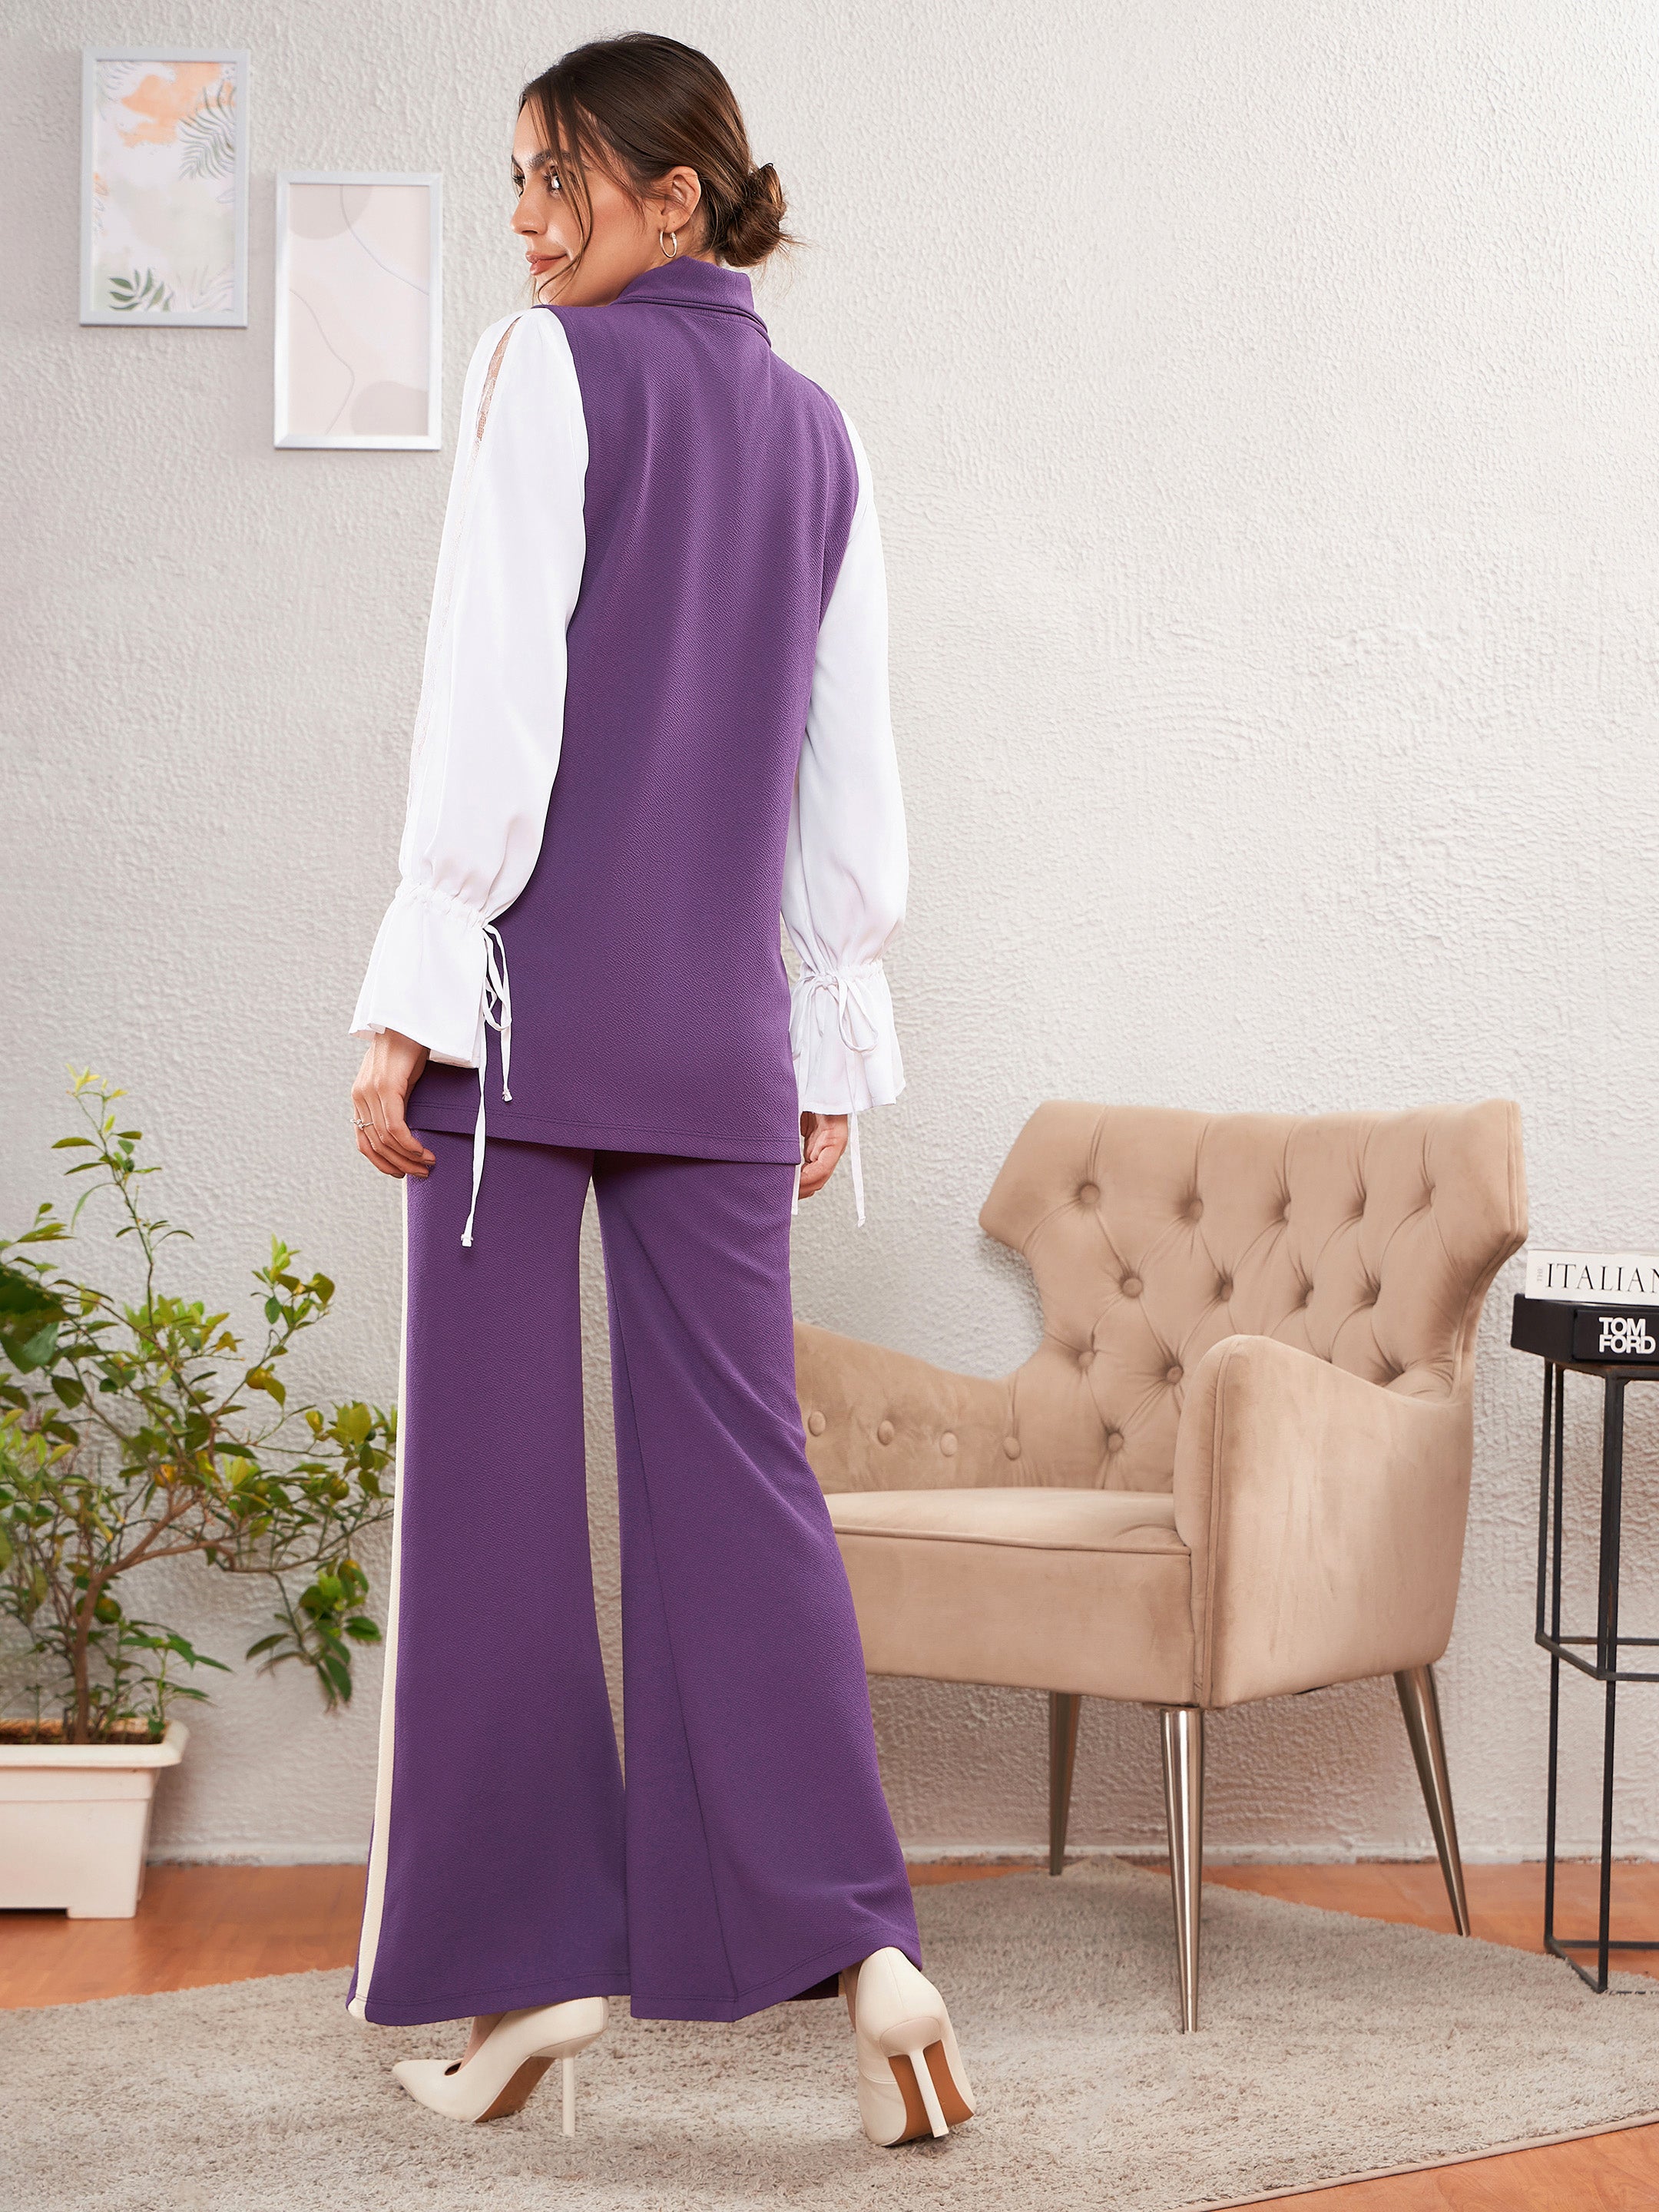 Women's Purple Sleeveless Blazer With Bell Bottom Pants - SASSAFRAS